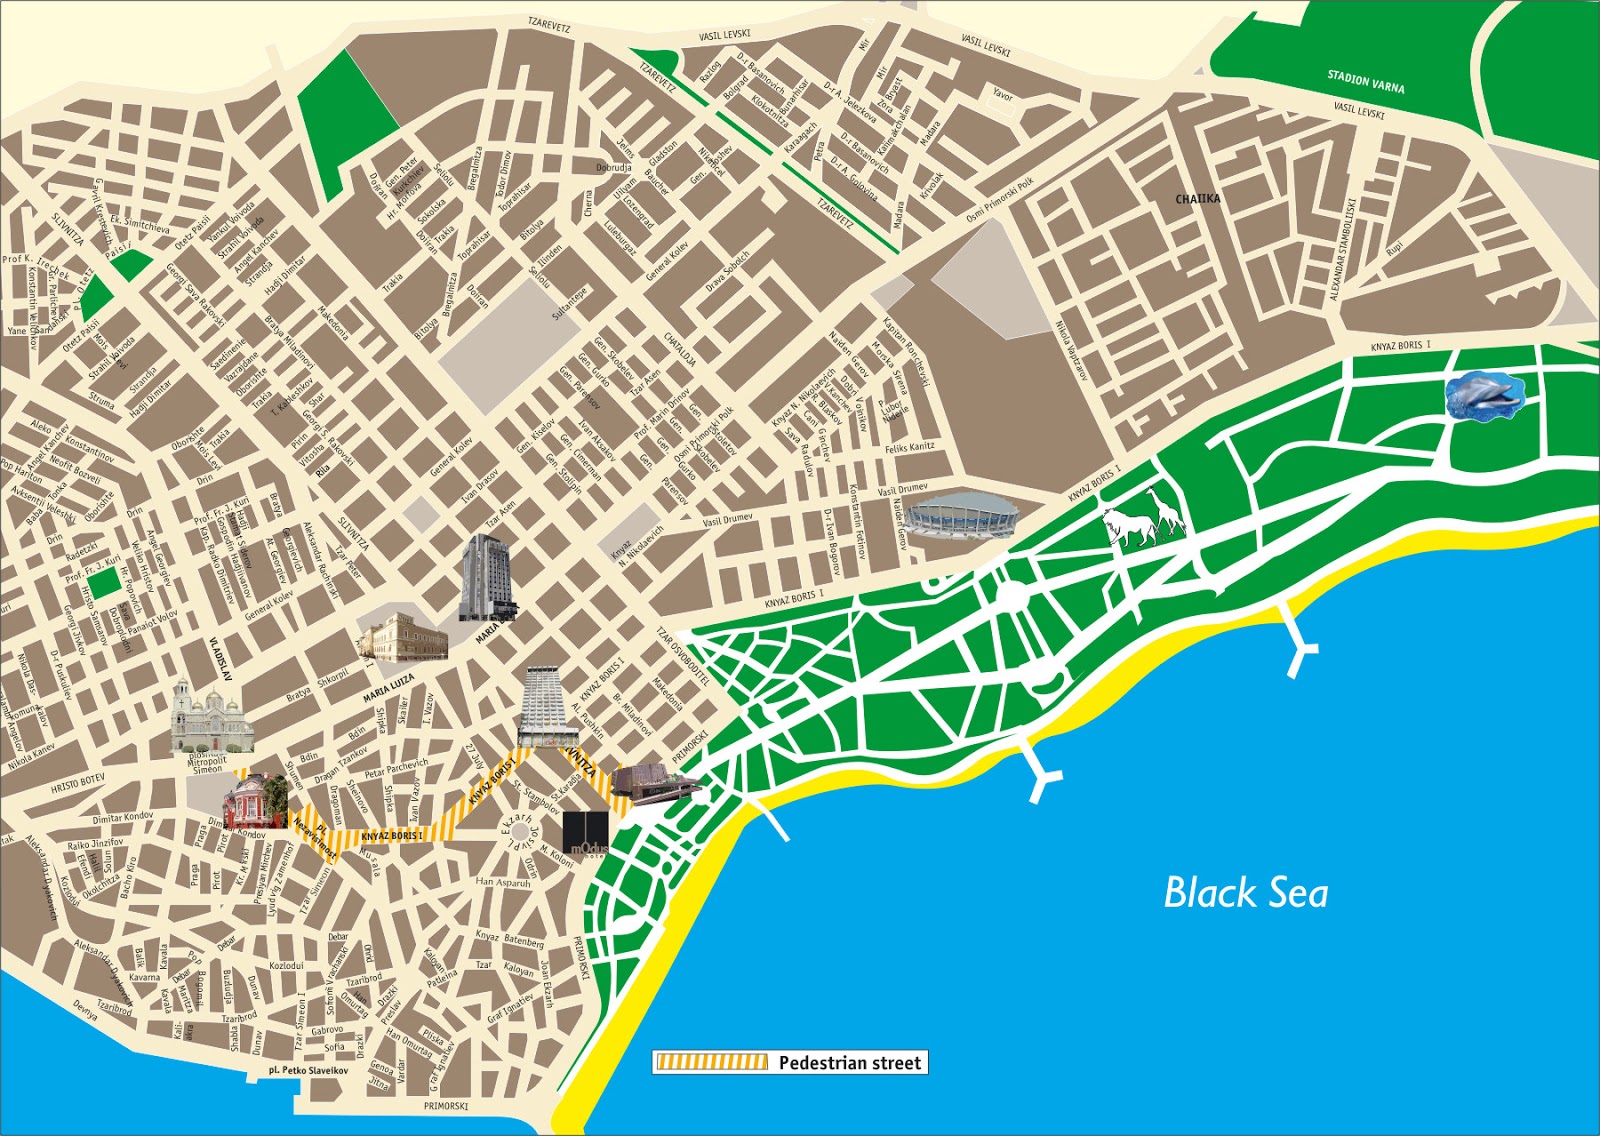 http://4.bp.blogspot.com/-KBgpPV0tqog/Tt1kKpH4OzI/AAAAAAAAI7k/5pbbNEMIrKc/s1600/mOdus+map+Varna+City+Map.jpg